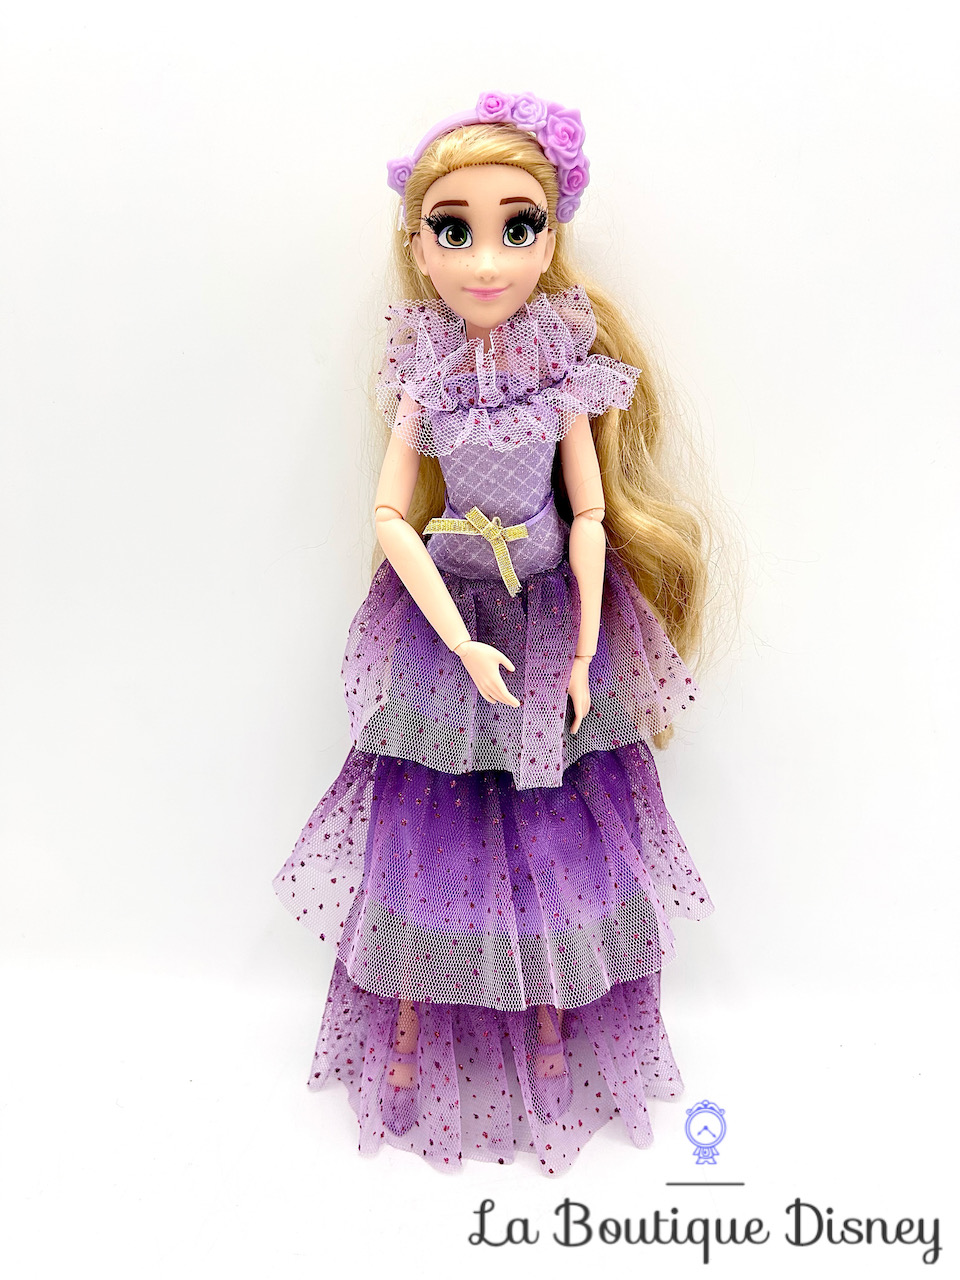 Poupée-Raiponce-Style-Series-Disney-Princesse-Hasbro-2017-robe-violette-30-cm